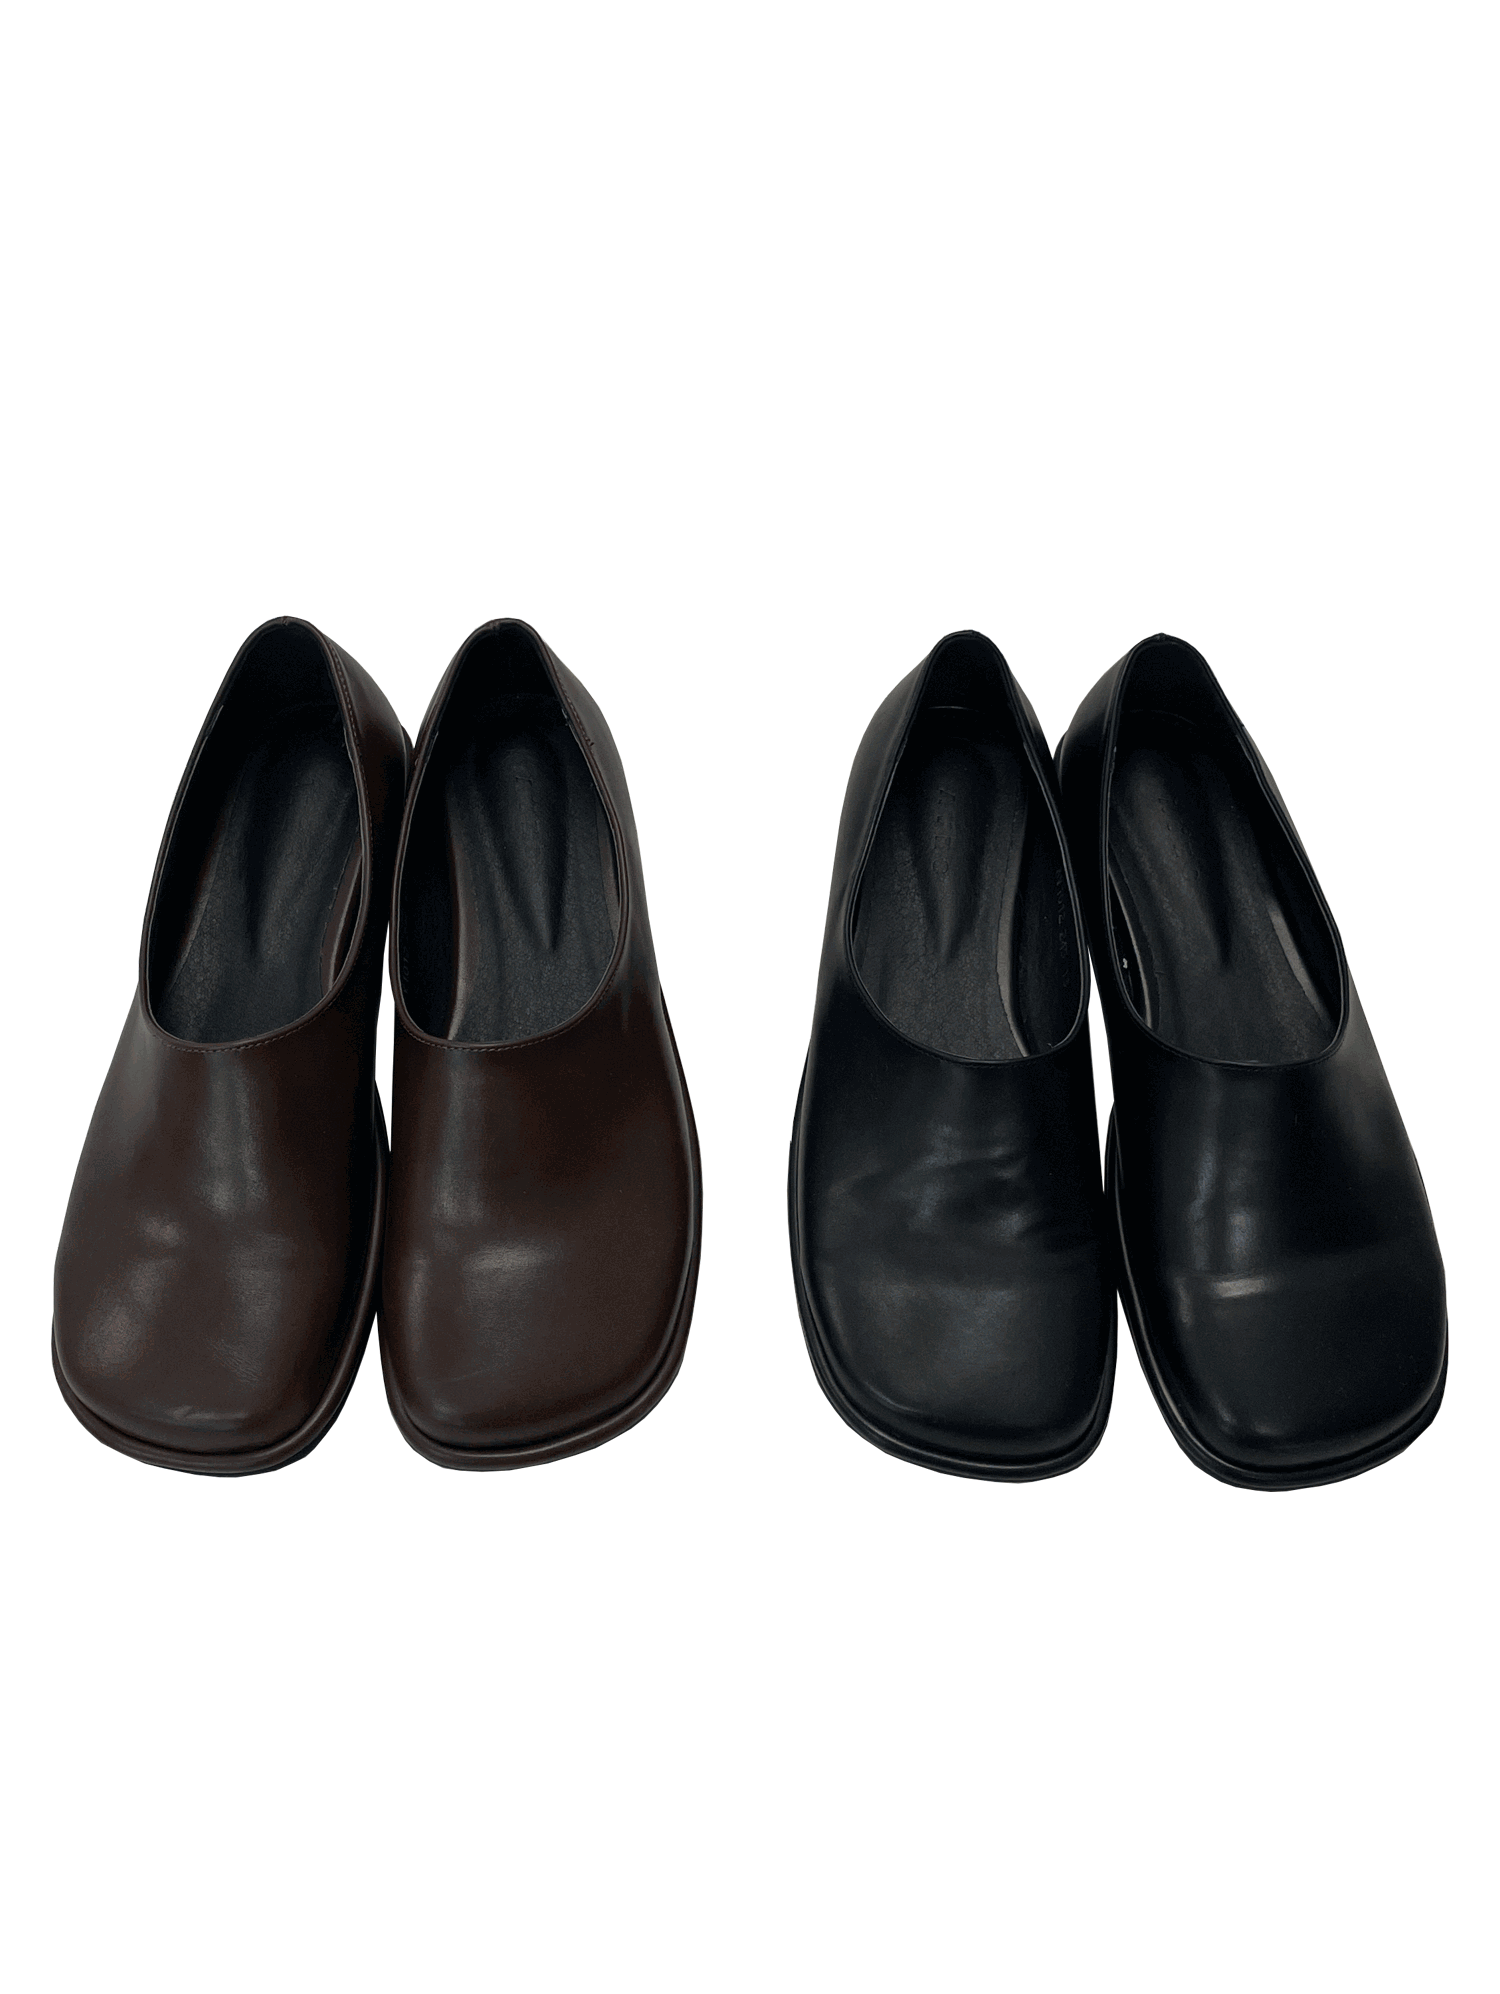 [SALE] Basic flat loafer (정가 34,000원) (교환, 환불 불가)